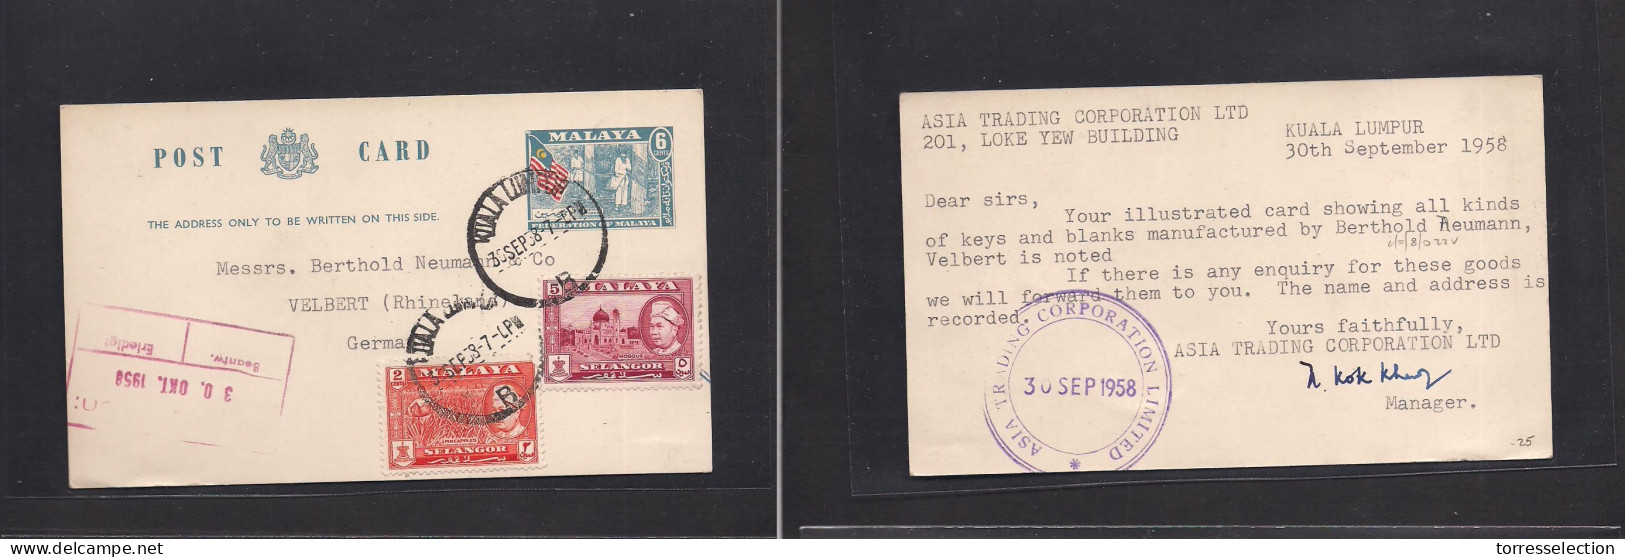 MALAYSIA. 1958 (30 Sept) KL - Germany, Velbut (30 Oct) 6c Blue Stat Card + 2 Adtls. Fine Used. XSALE. - Malesia (1964-...)